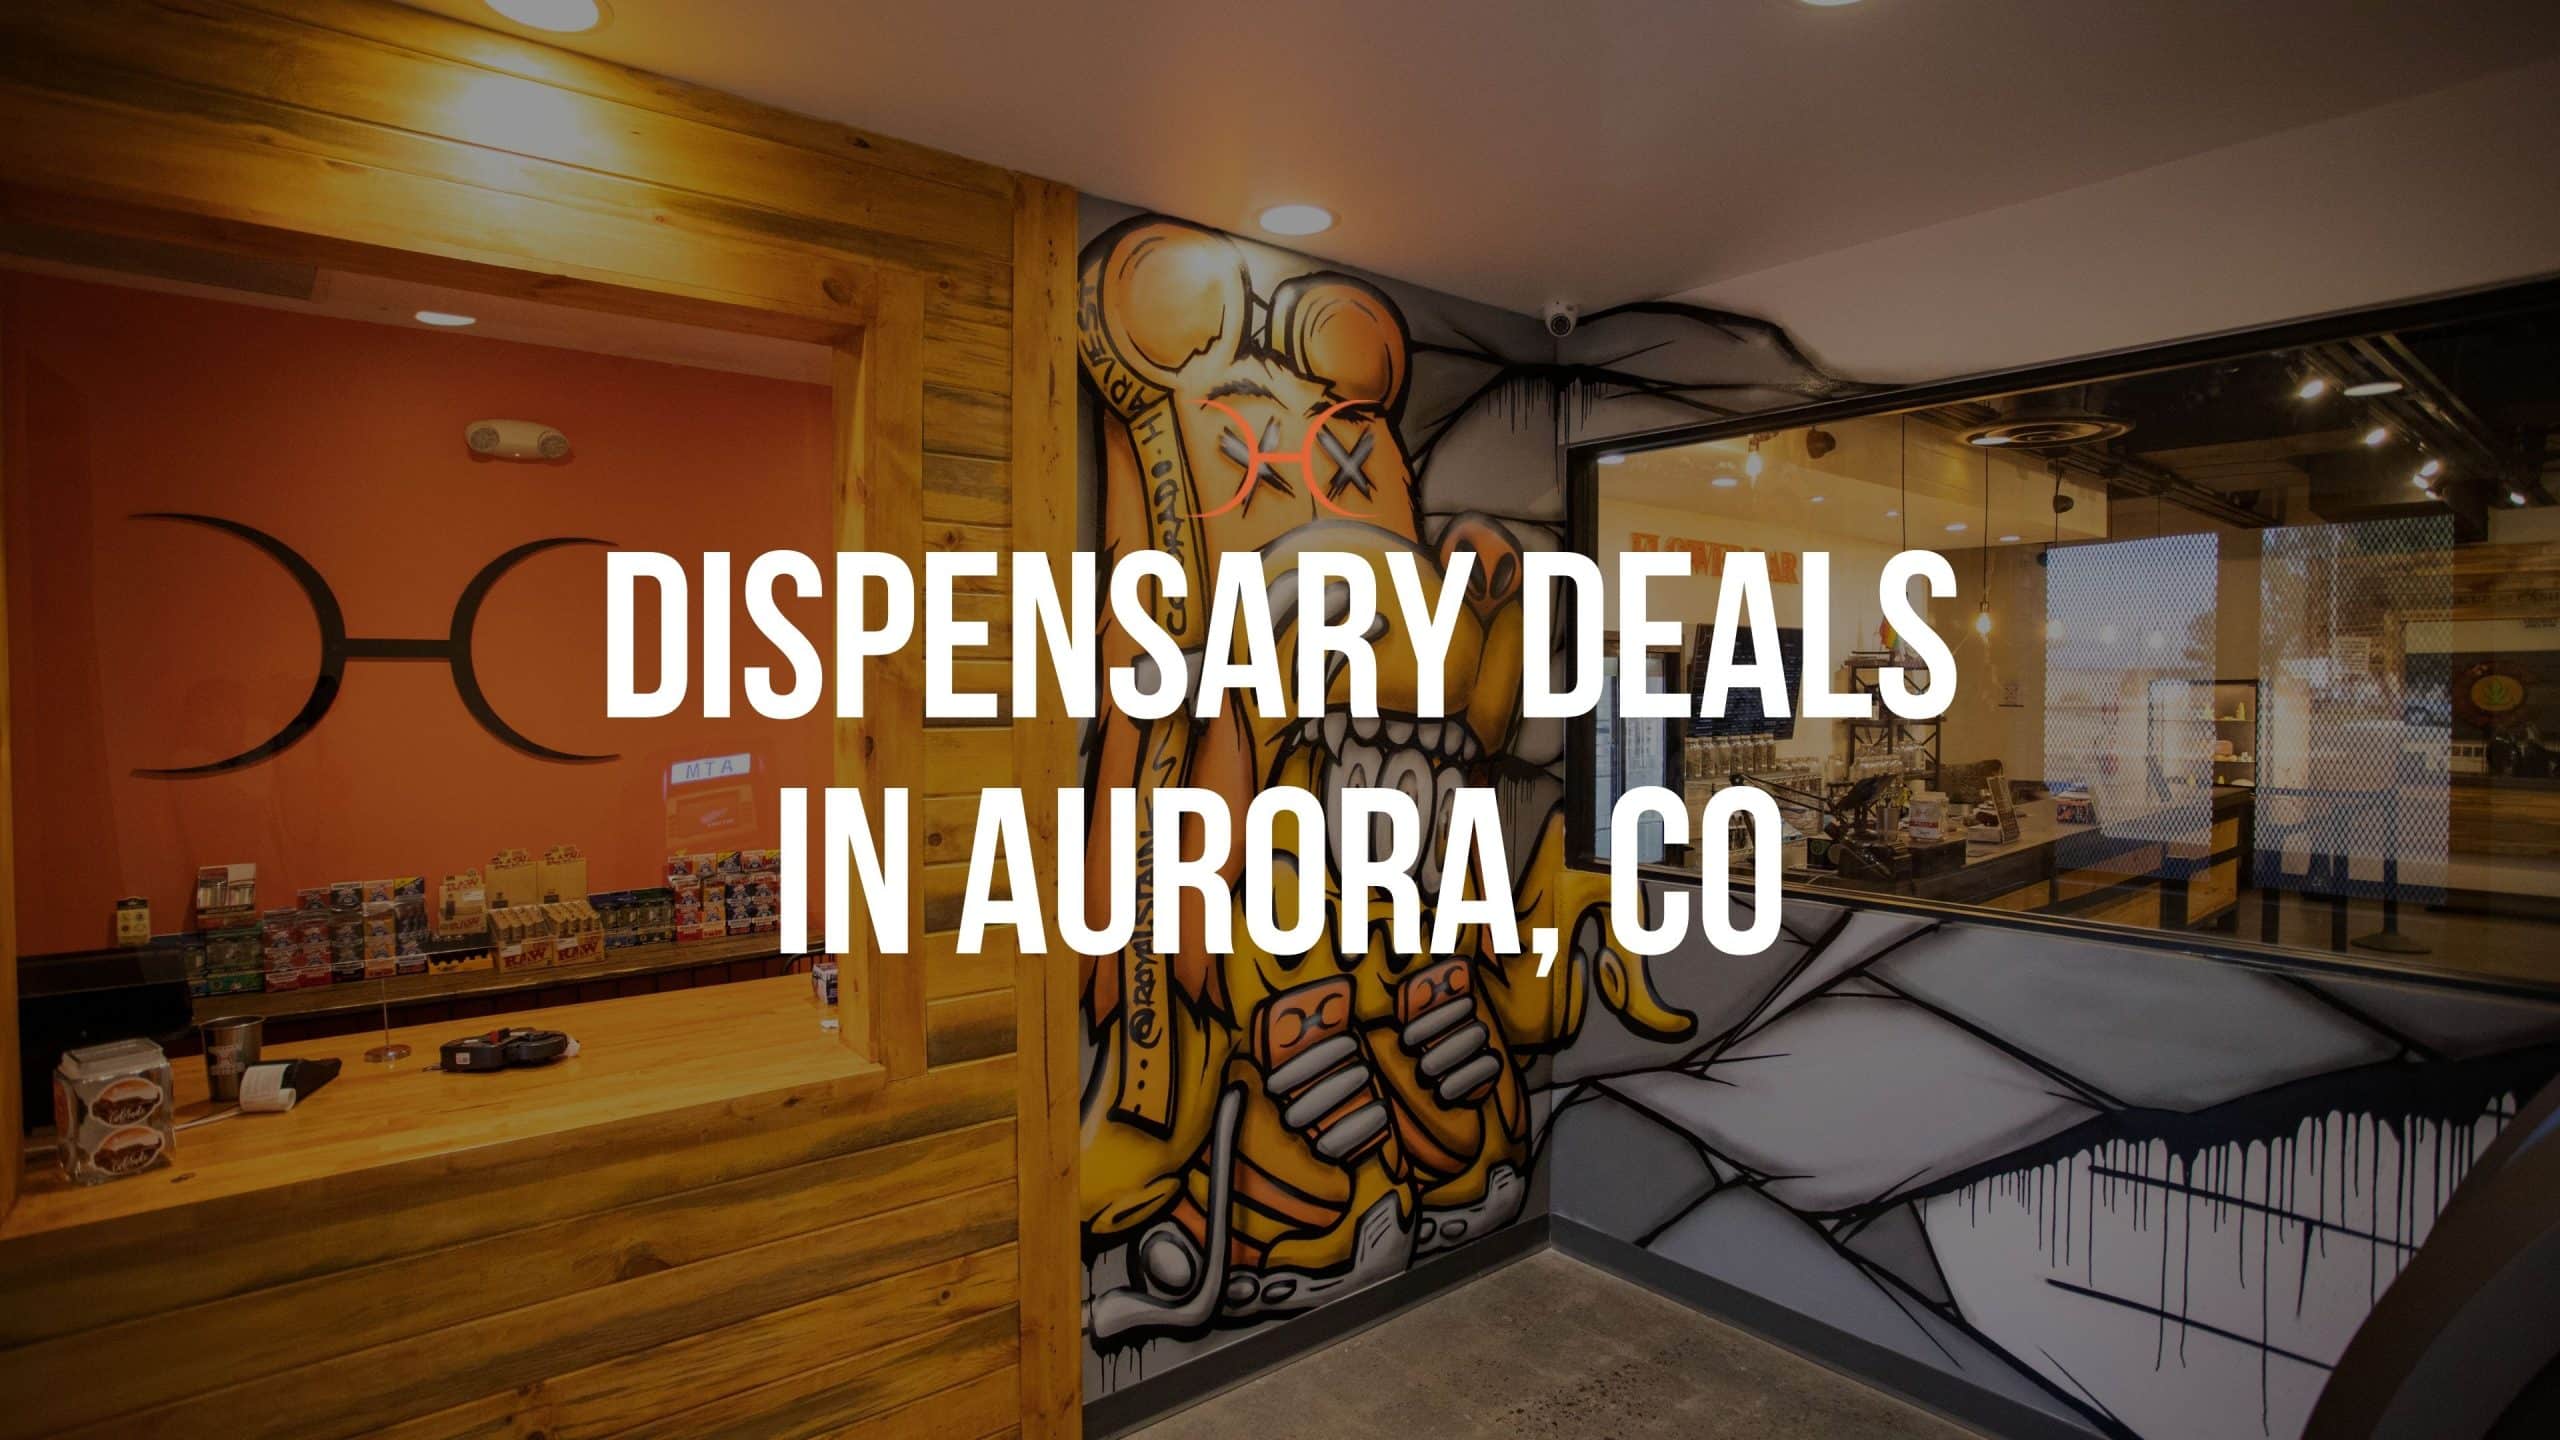 Best Dispensary Deals In Aurora | Recreational Cannabis Deals By CHC